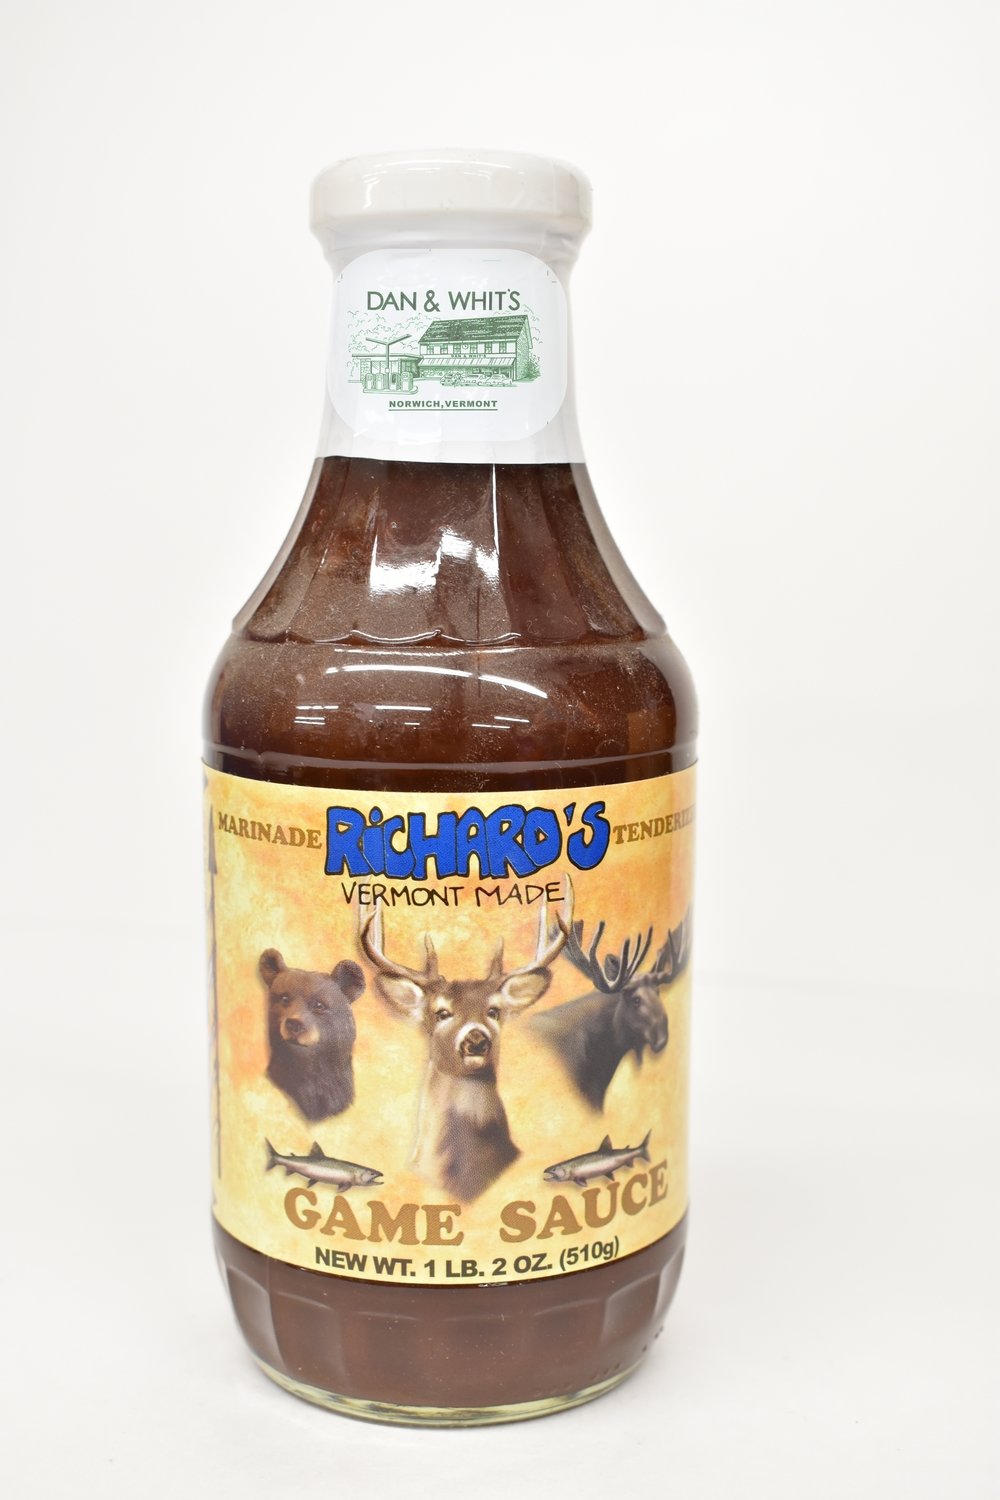 Richard's Vermont Game Sauce